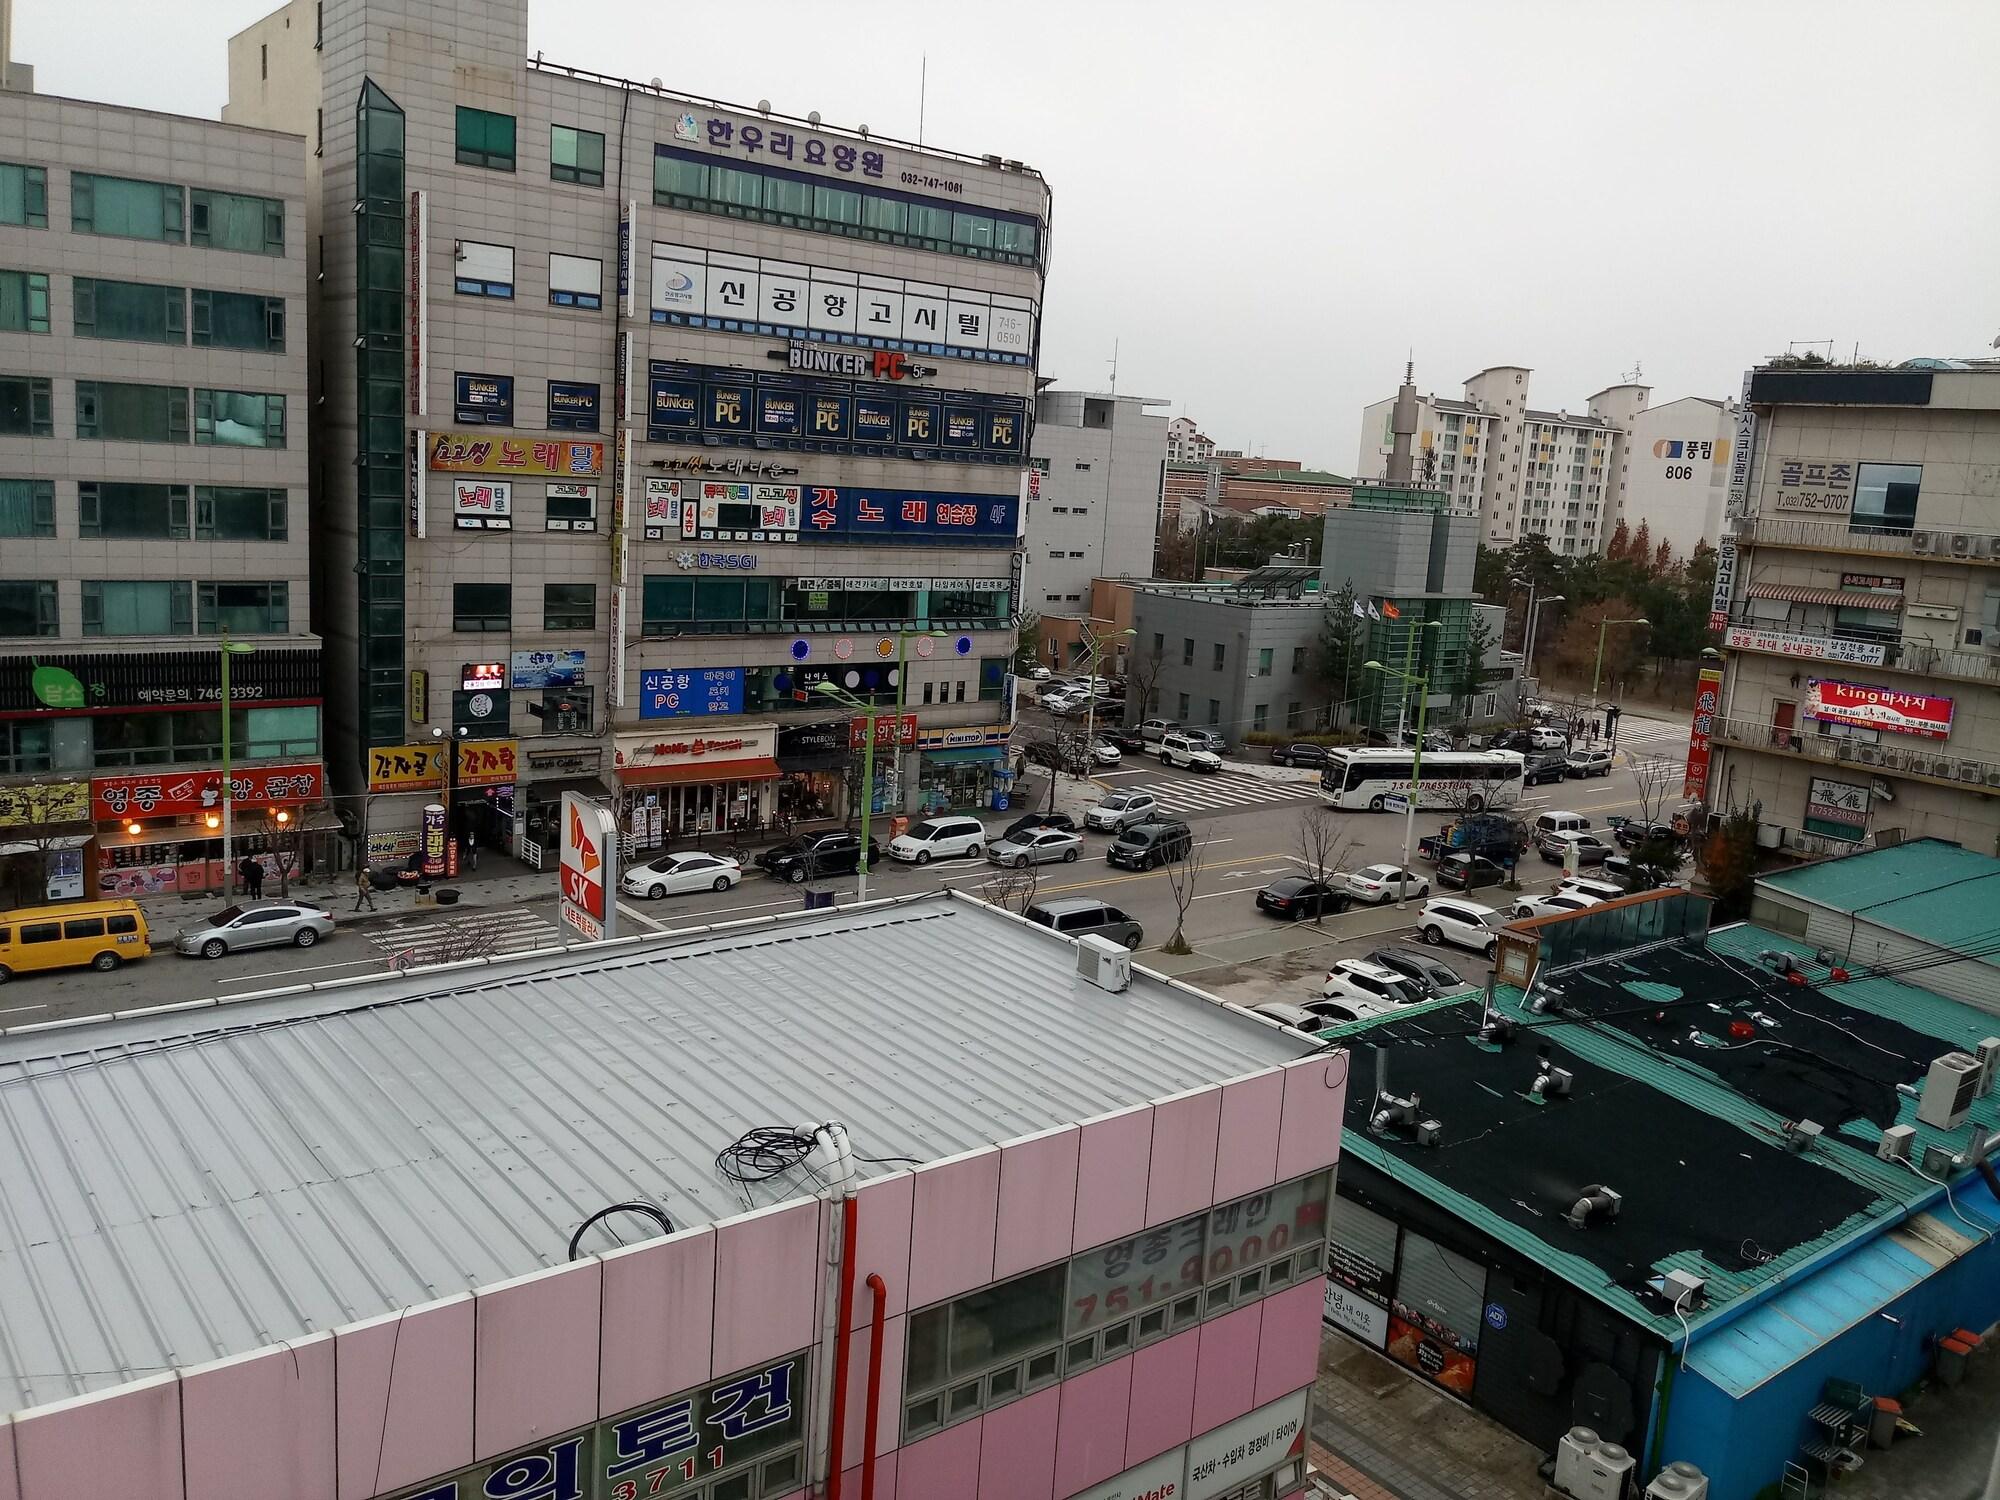 Incheon Aiport Airrelax Hotel Dış mekan fotoğraf